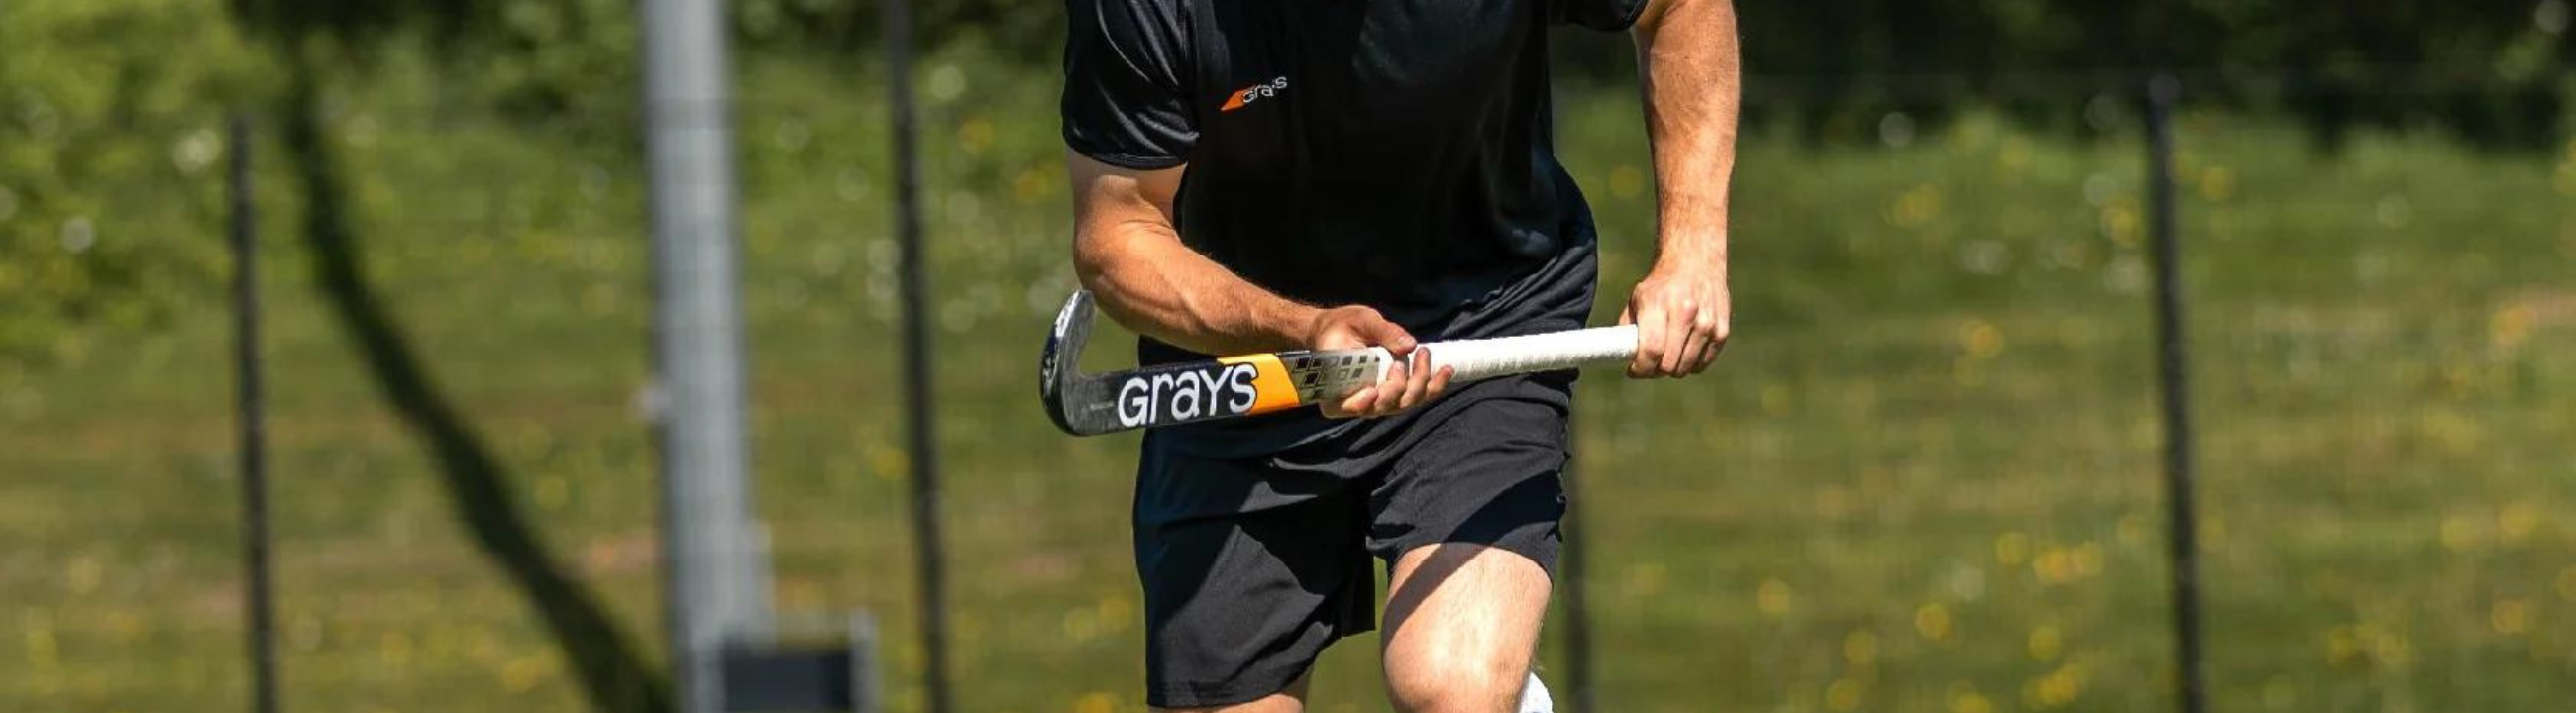 Grays Wooden Hockey Sticks